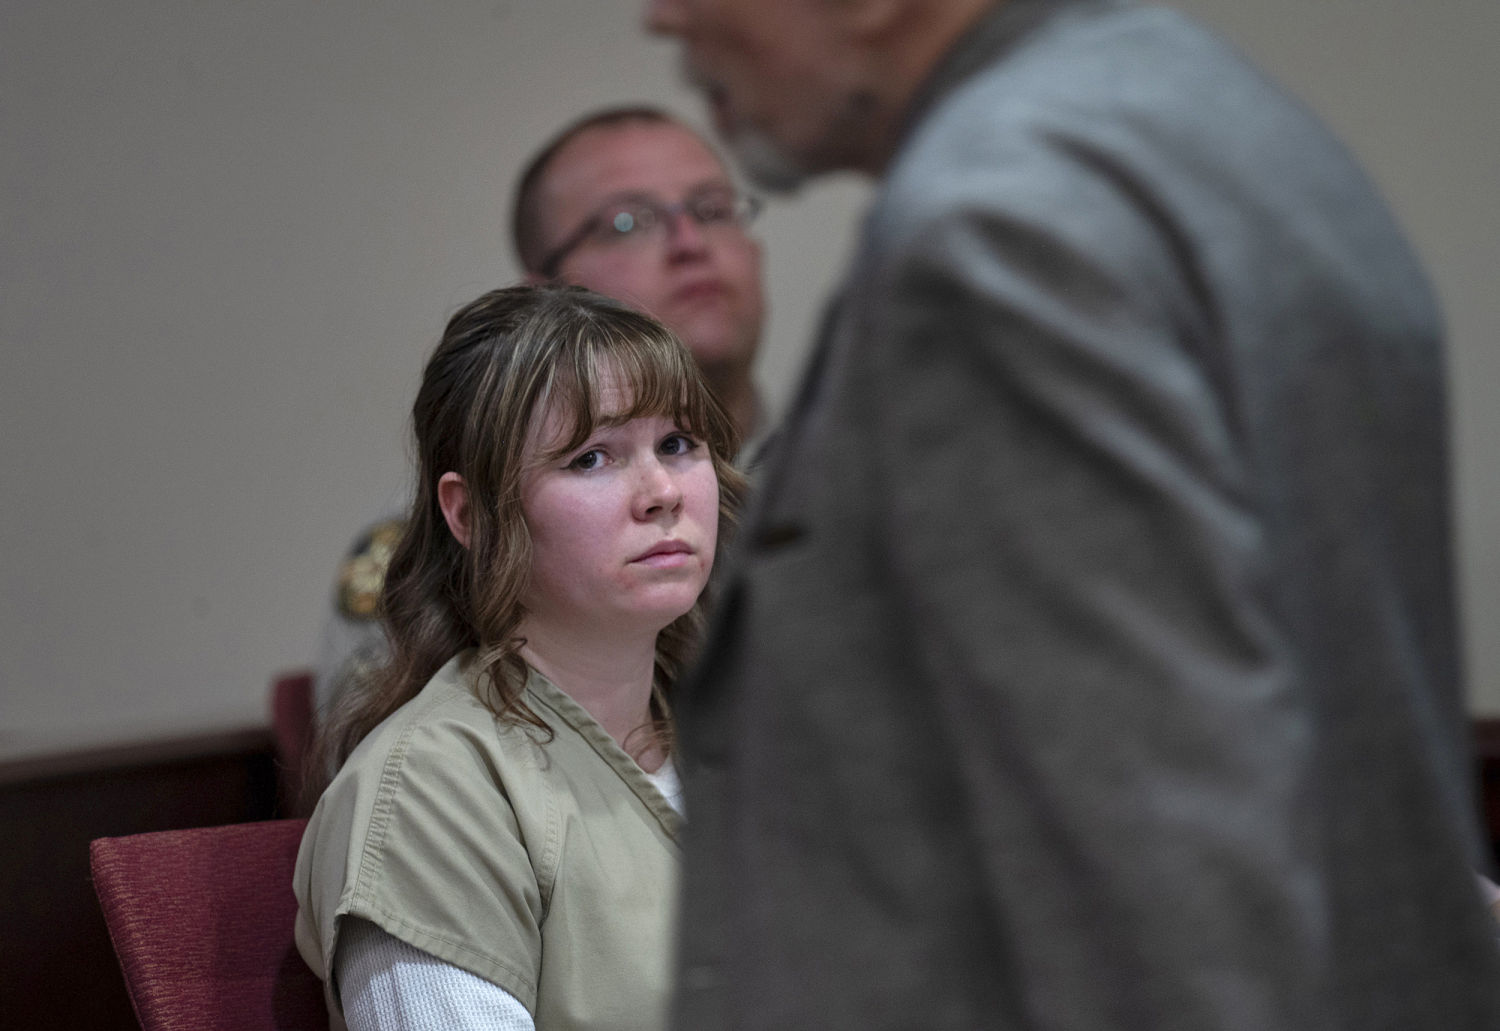 'Rust' movie armorer Hannah Gutierrez-Reed sentenced to 18 months